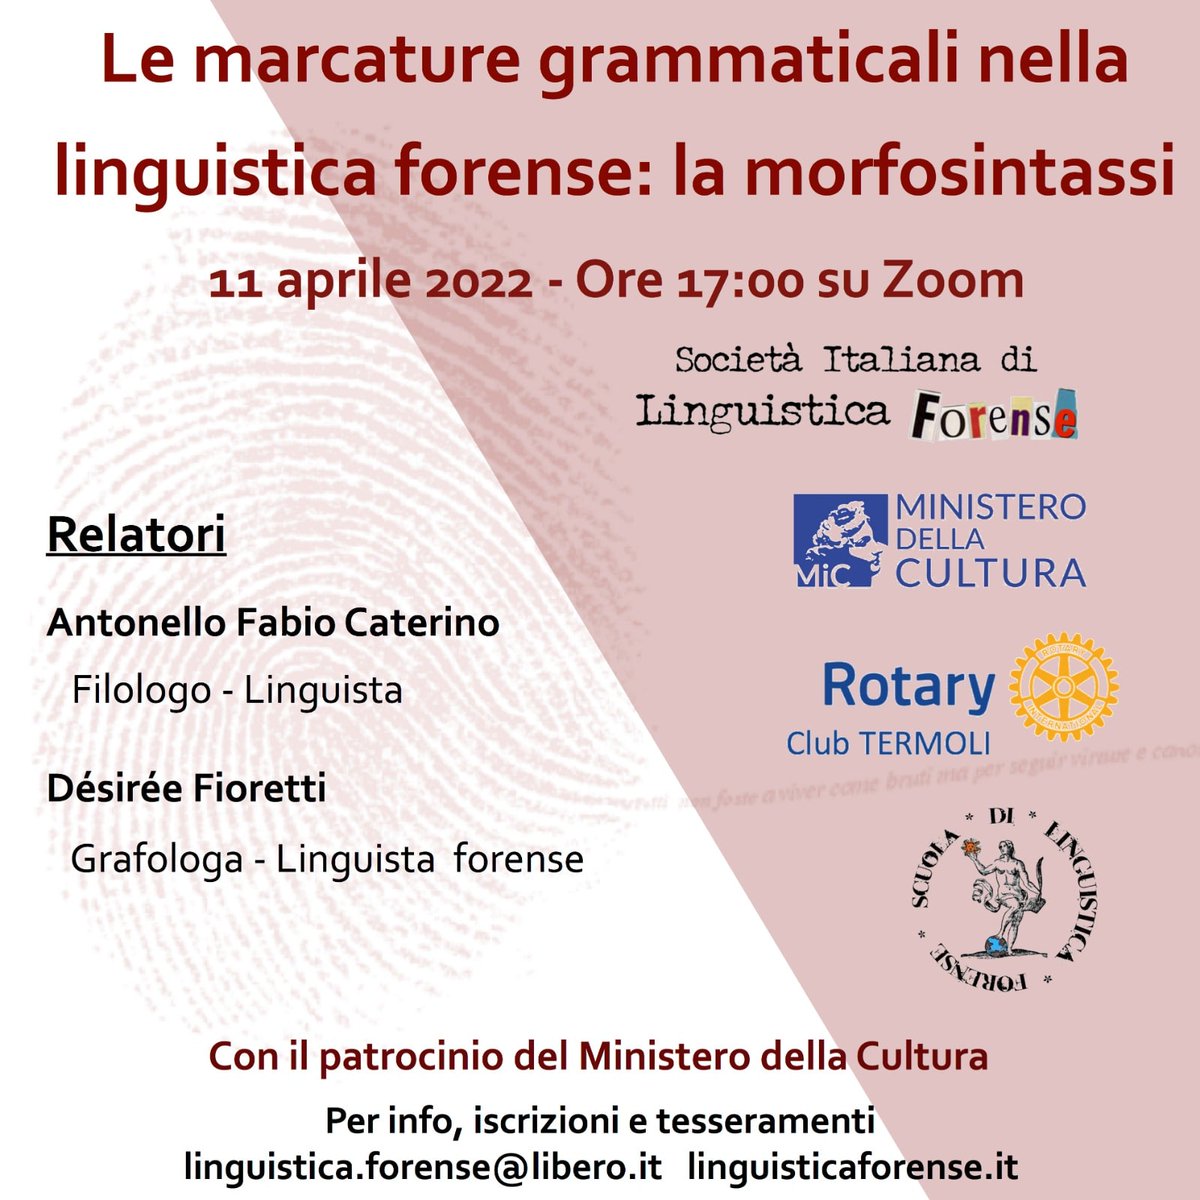 Continuano i seminari...

#digitalhumanities #forensiclinguistics #linguistics #formazione #linguisticaforense